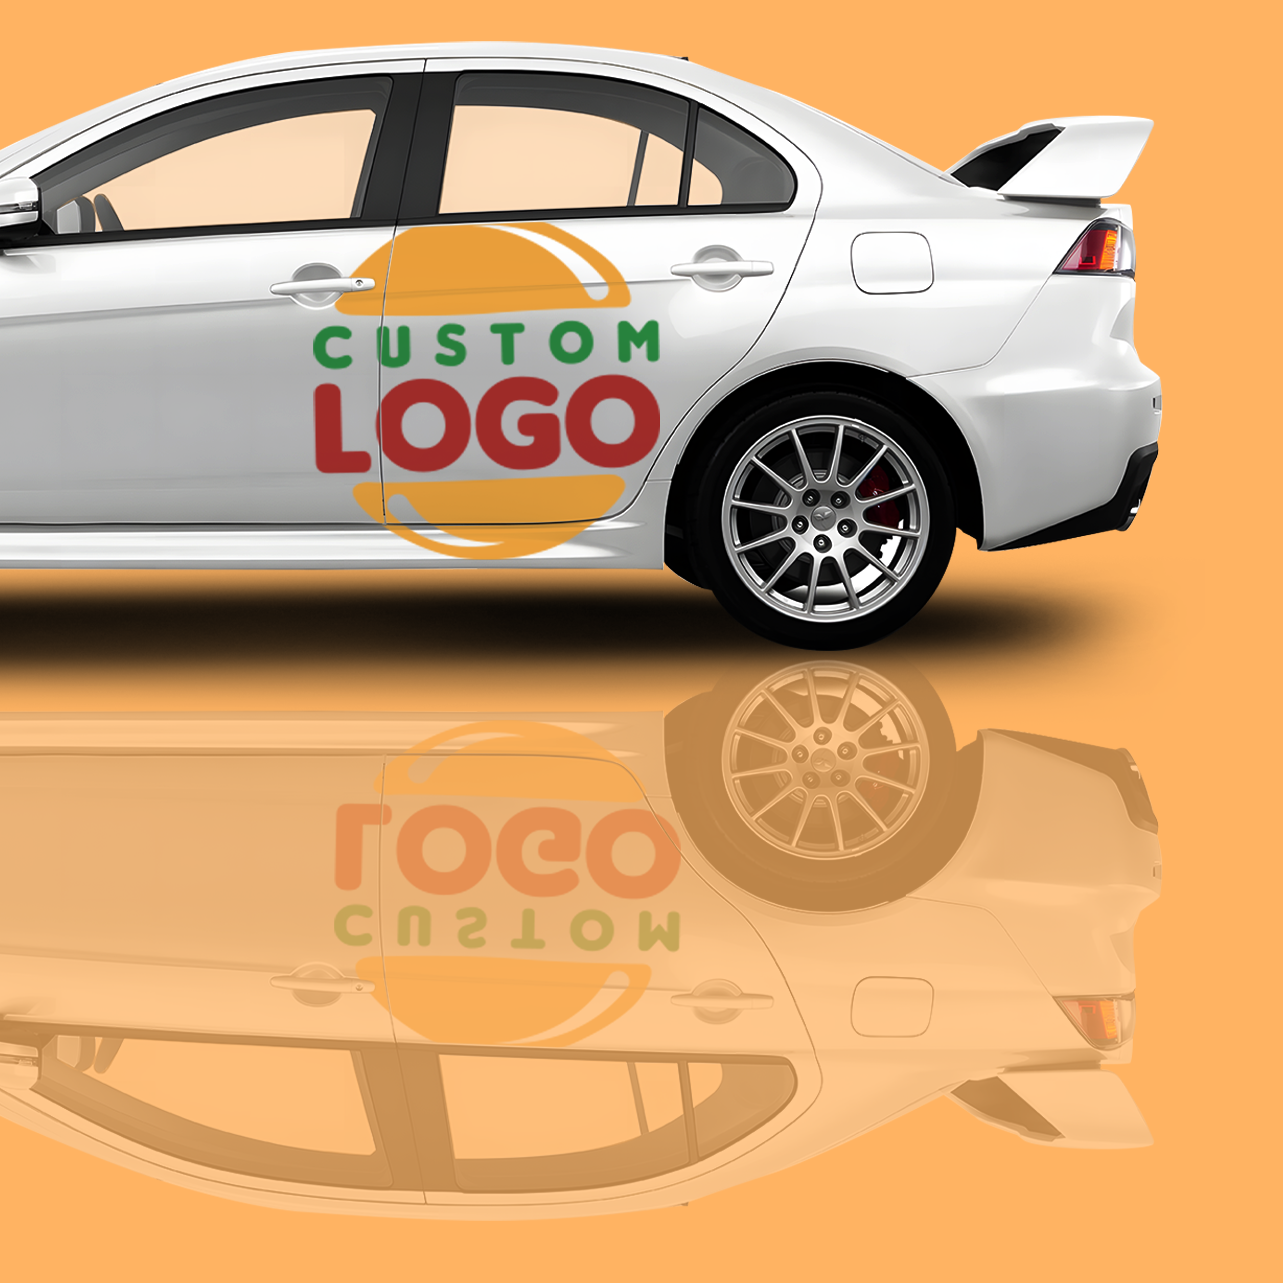 Custom Image Logo Itasha Car Side Door Decal Vinyl Sticker